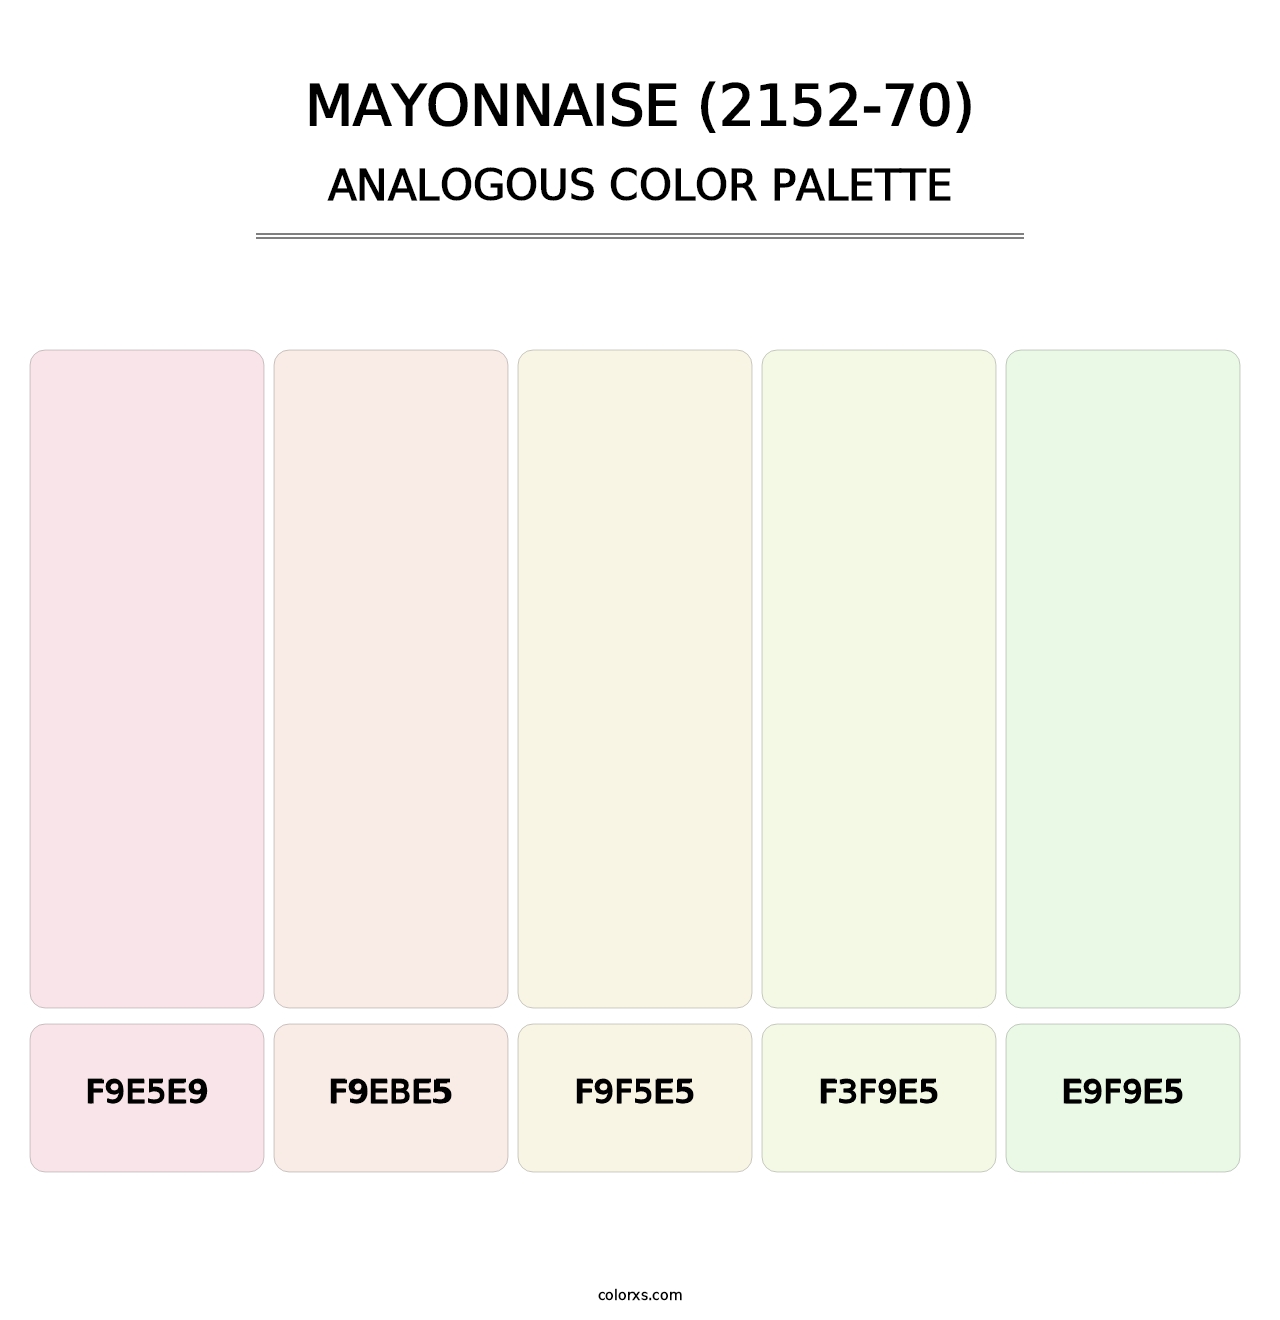 Mayonnaise (2152-70) - Analogous Color Palette